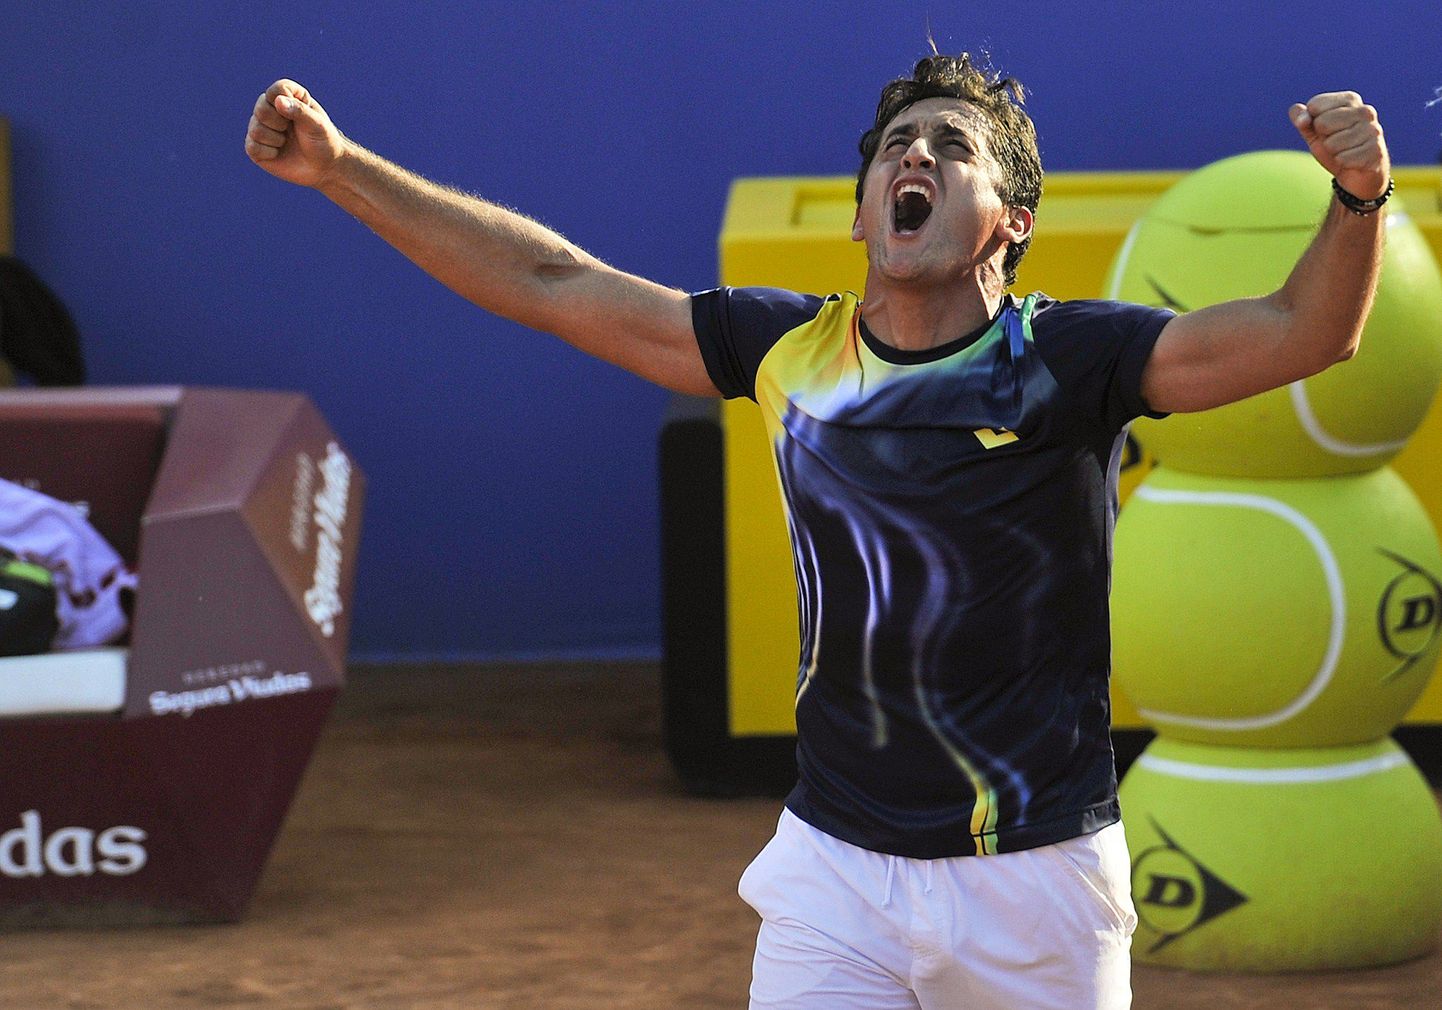 Spanish tennis player Nicolas Almagro celebrates after winning the ATP Barcelona Open "Conde de Godo" tennis match against Spanish tennis player Rafael Nadal in Barcelona on April 25, 2014. Almagro won the match 2-6, 7-6 (7/5), 6-4.  AFP PHOTO / JOSEP LAGO